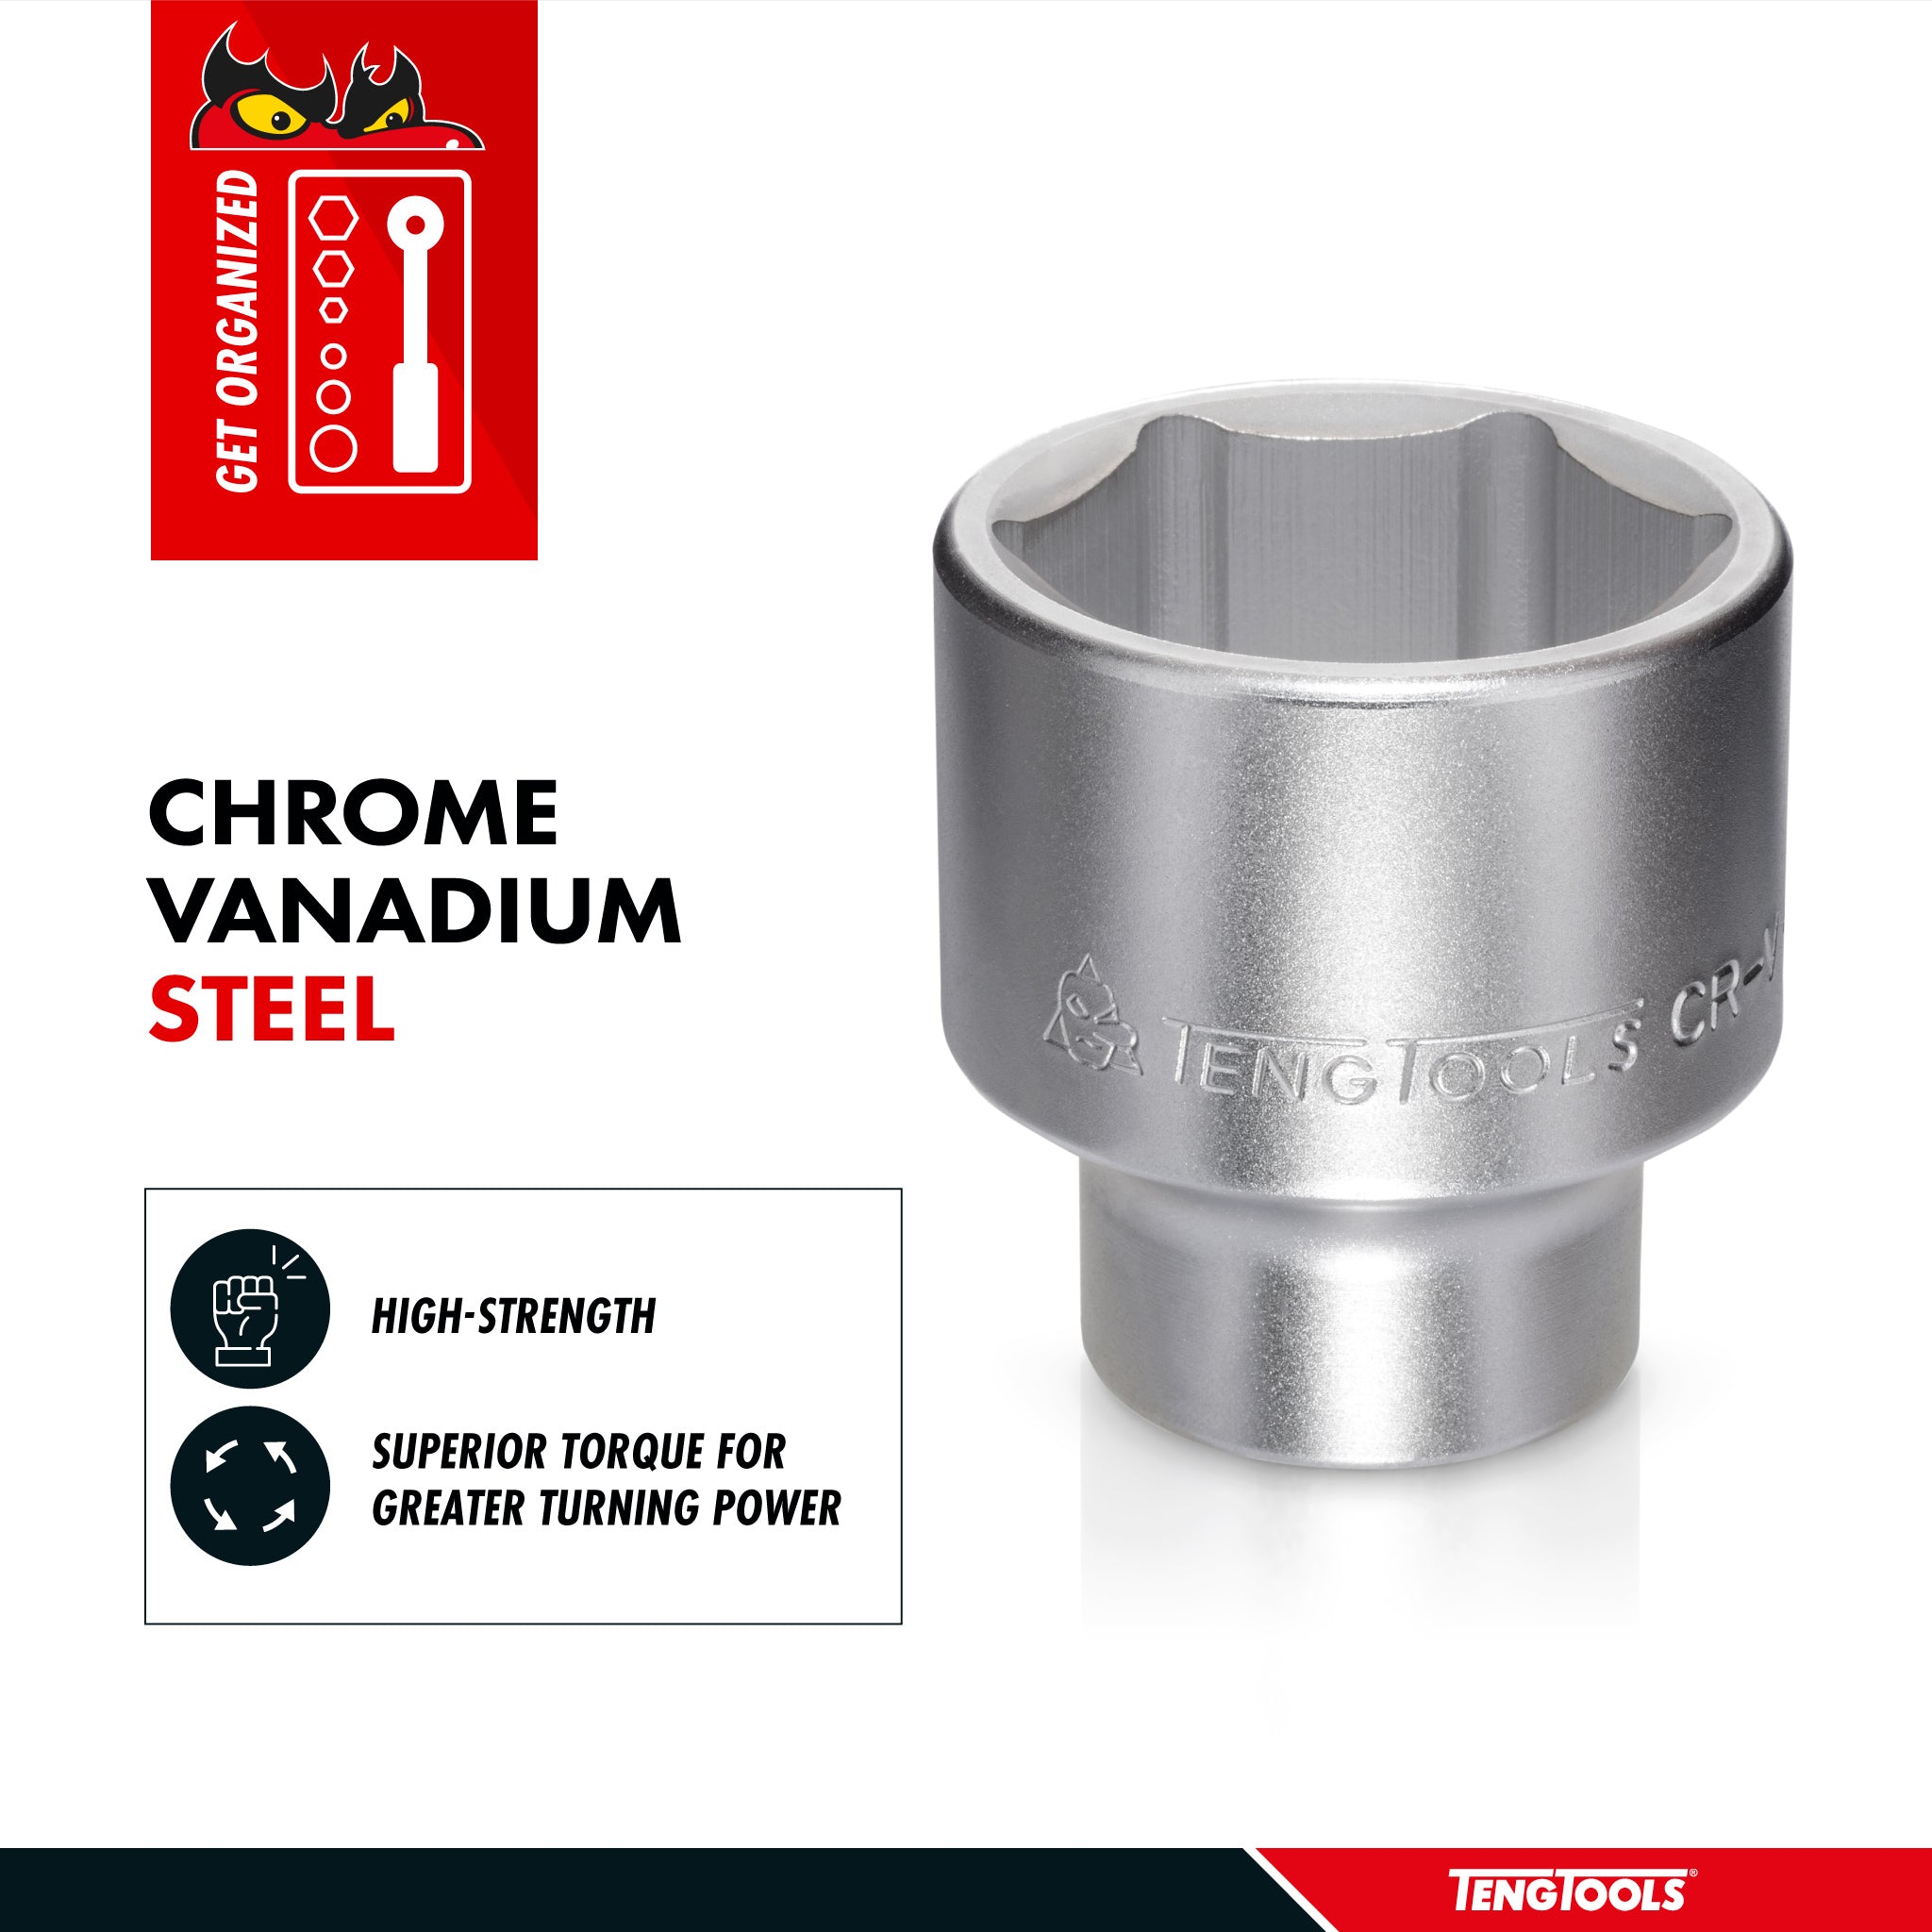 Teng Tools 3/4 Inch Drive 6 Point Metric Shallow Chrome Vanadium Sockets